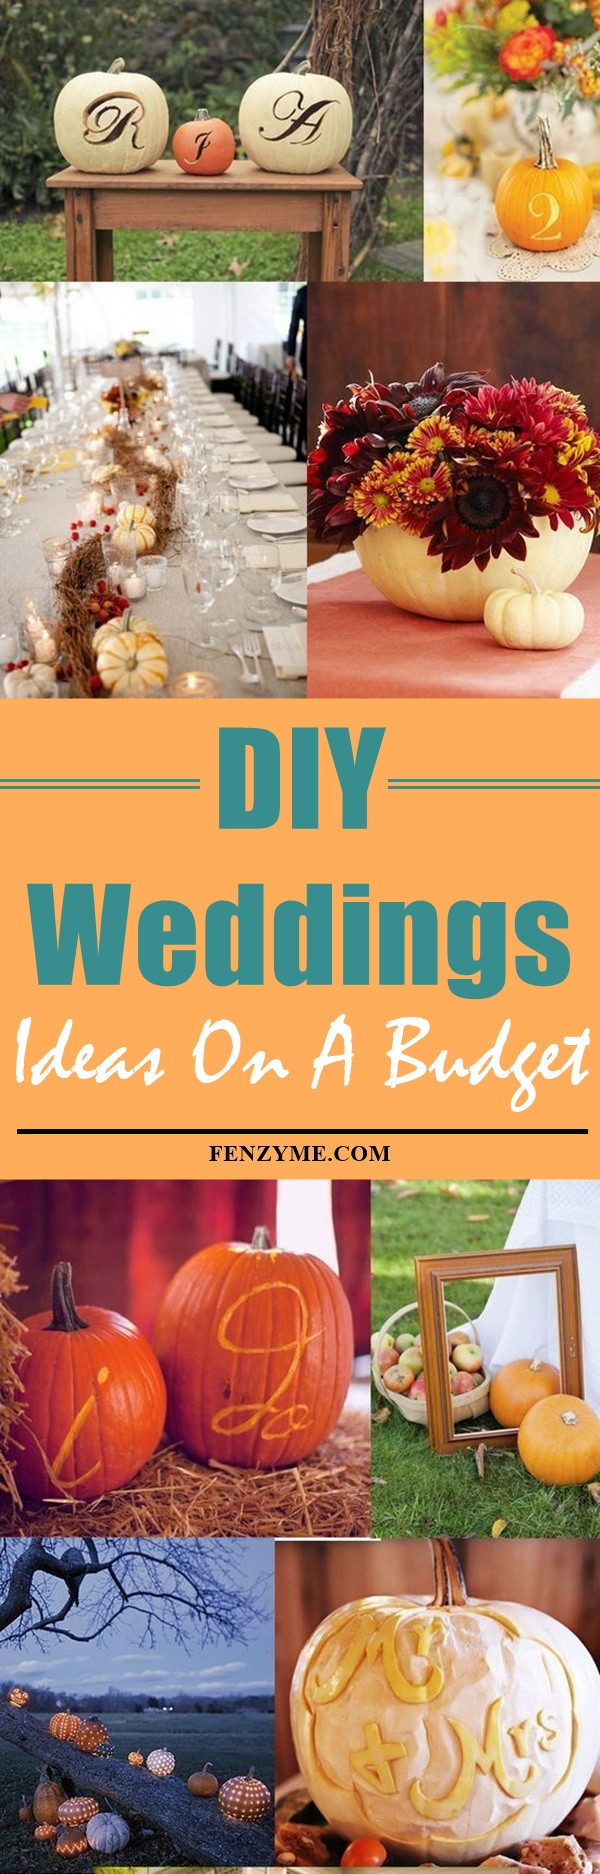 DIY Weddings On A Budget
 30 DIY Weddings Ideas A Bud To Make It Unfor table